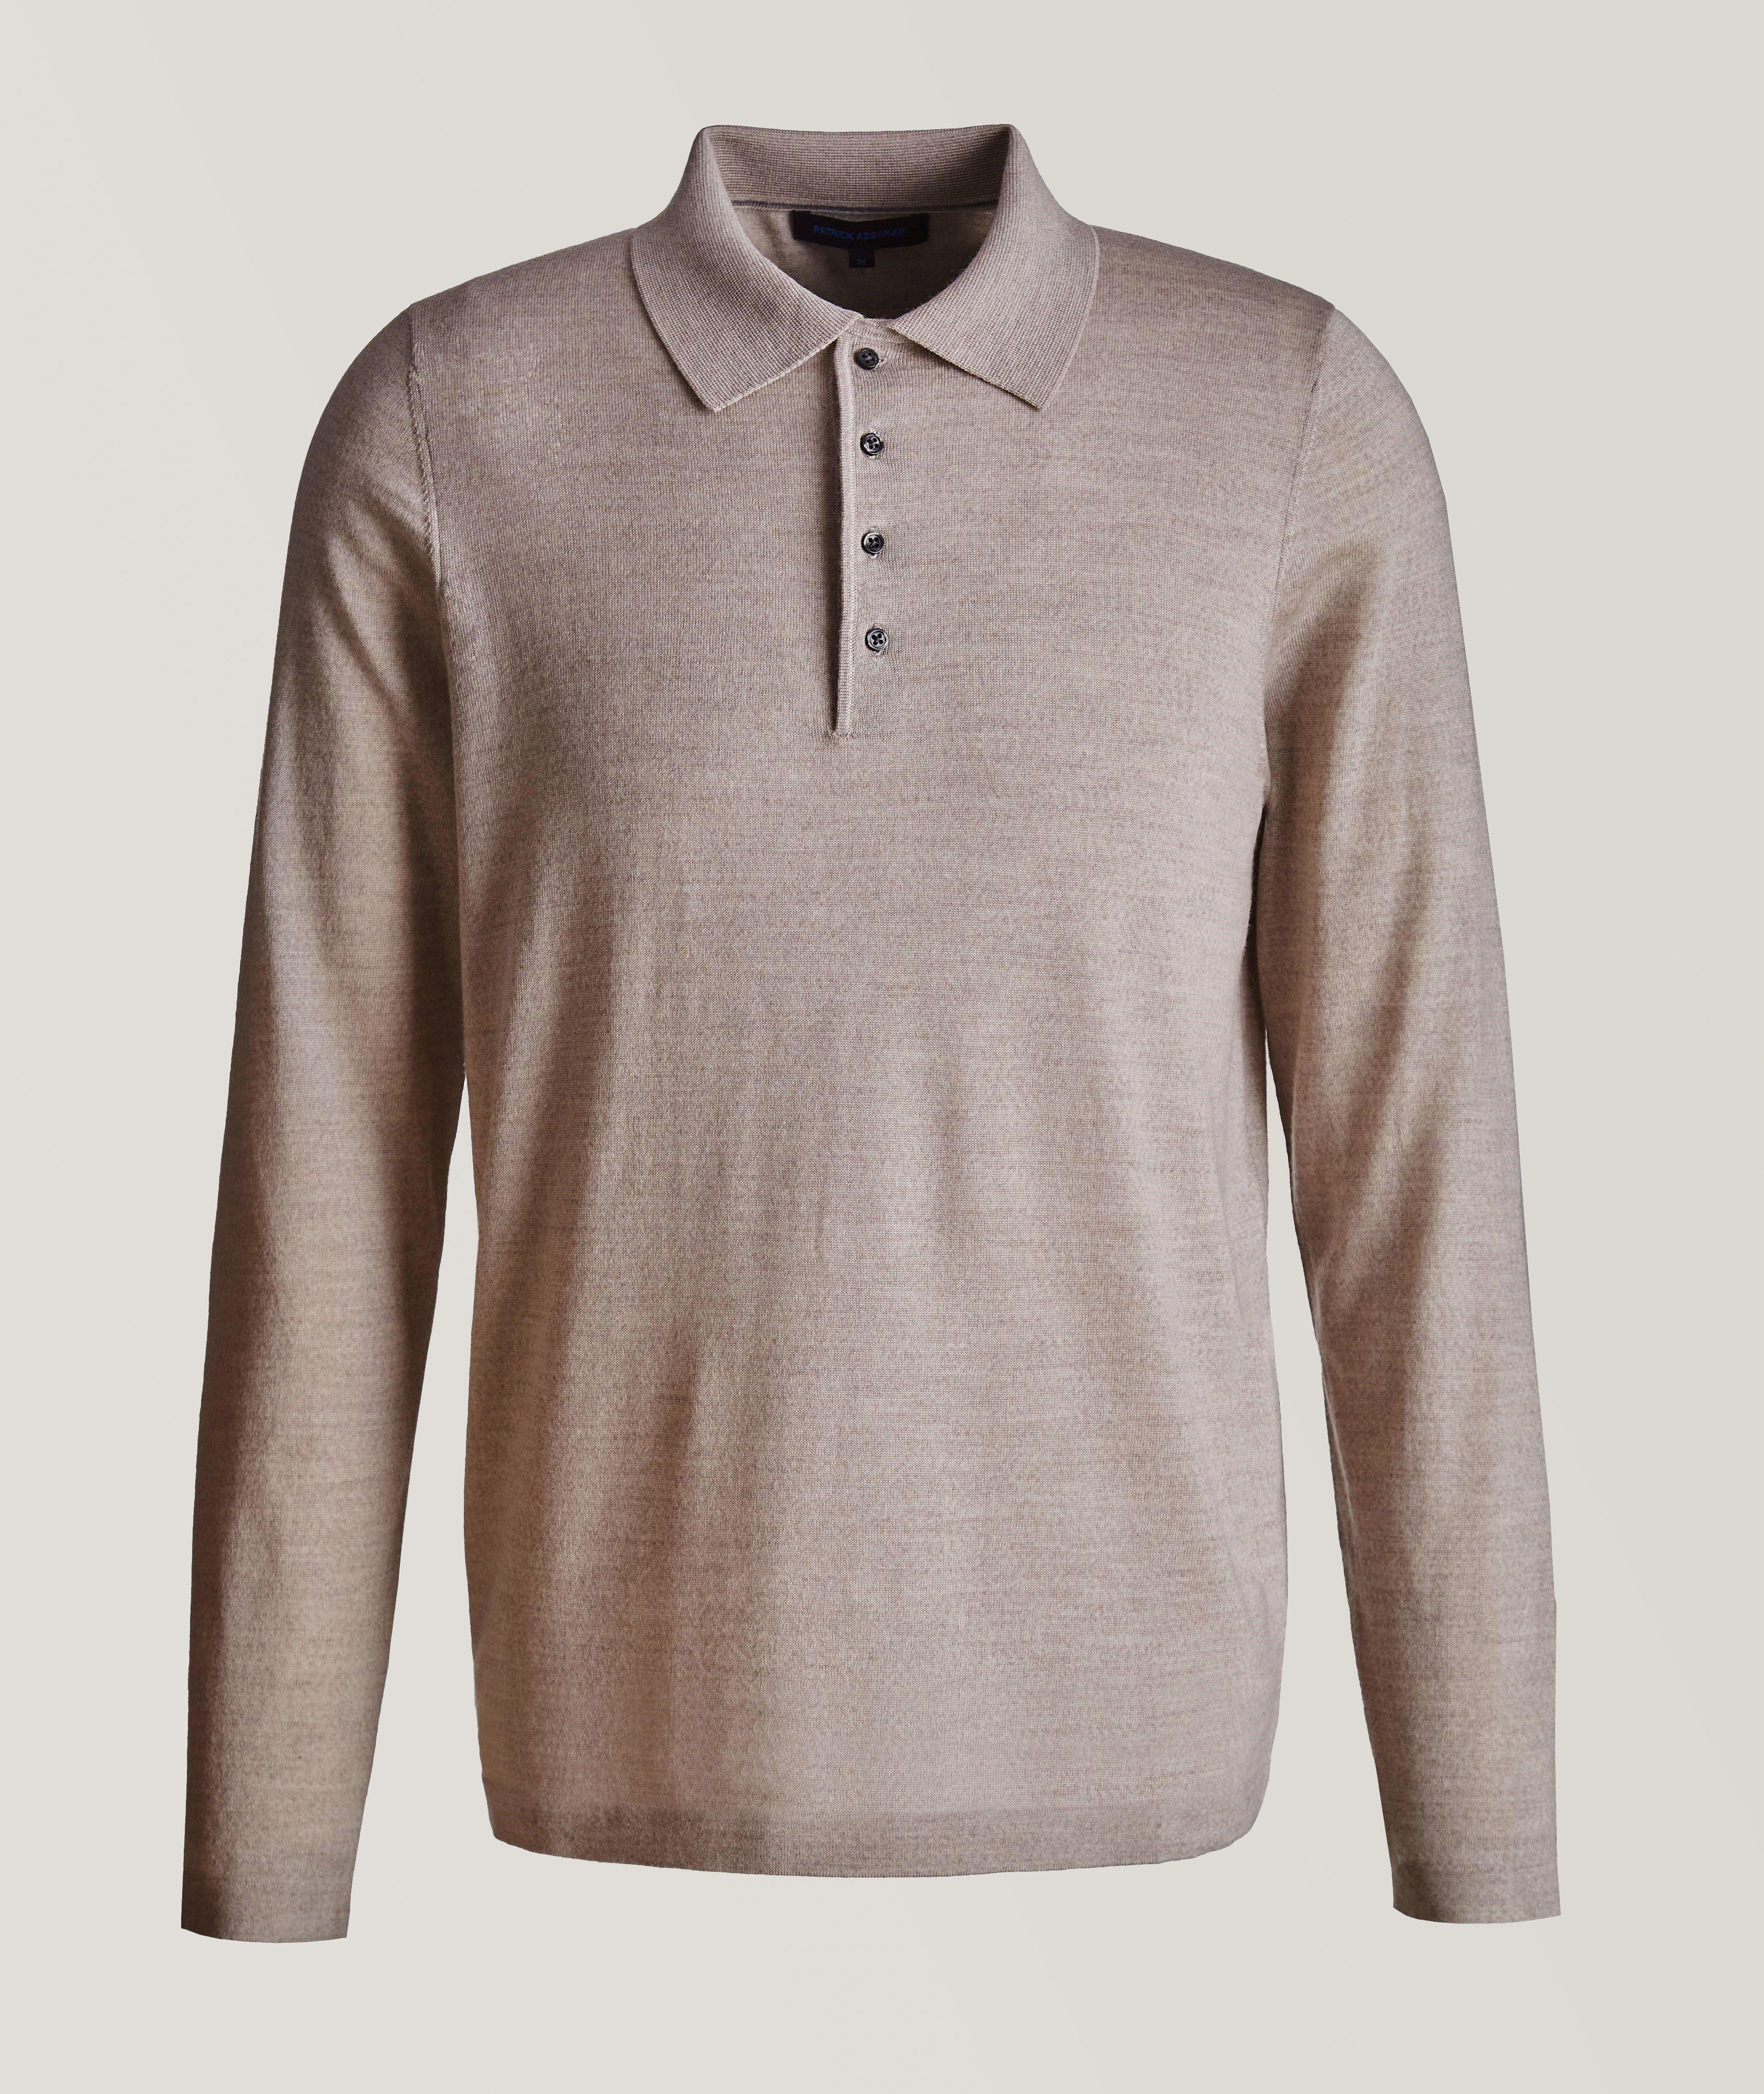 Long-Sleeve Merino Wool Polo image 0